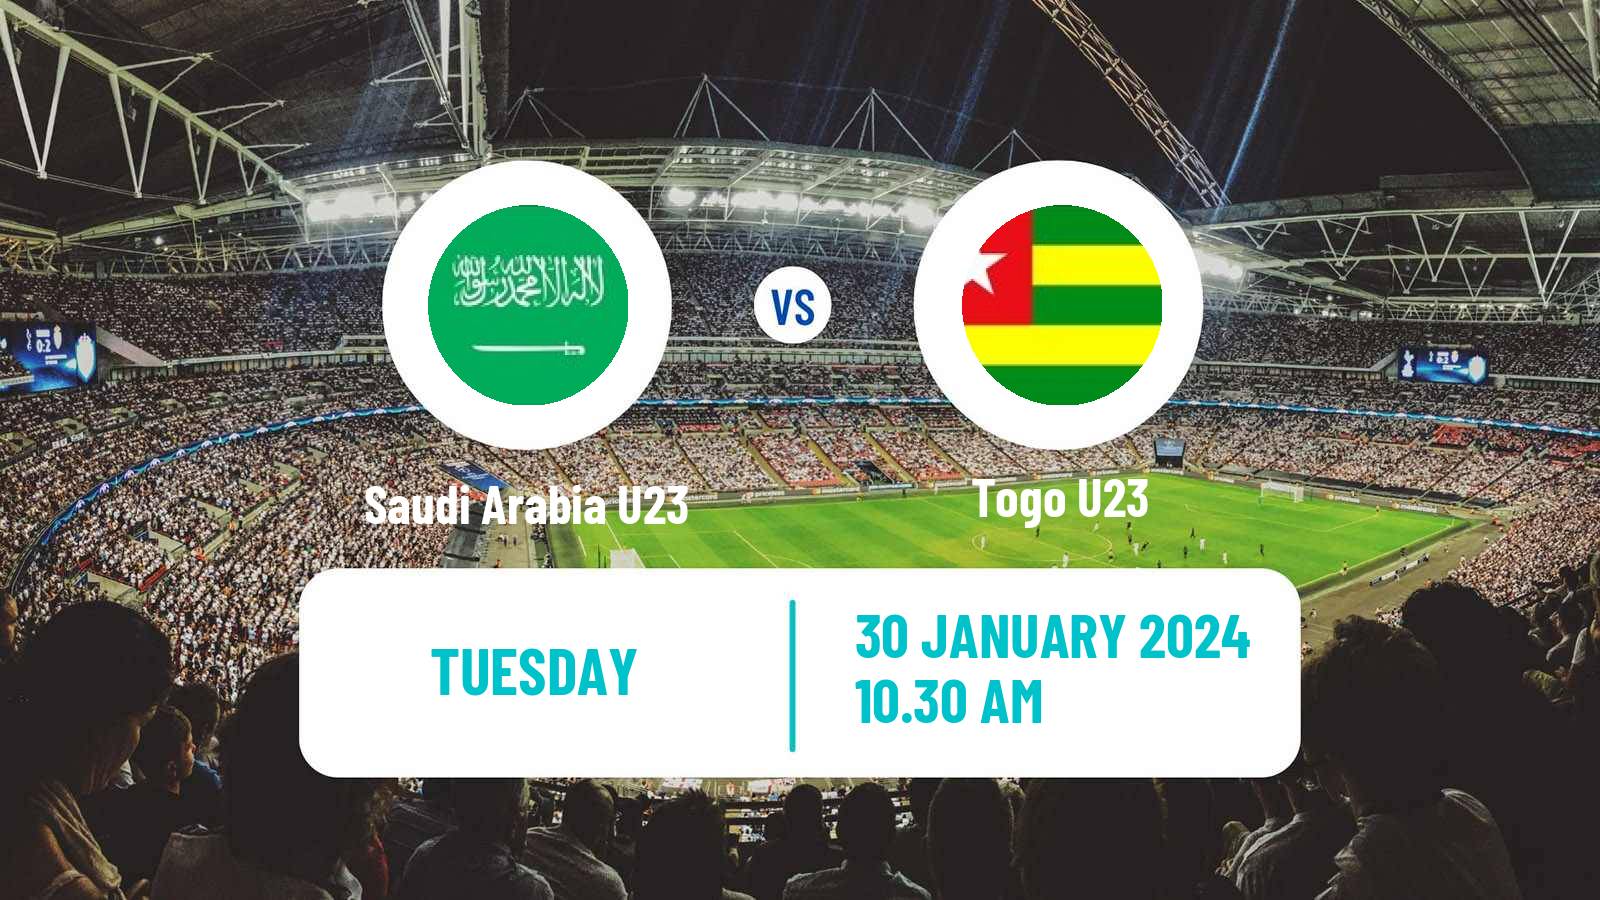 Soccer Friendly Saudi Arabia U23 - Togo U23